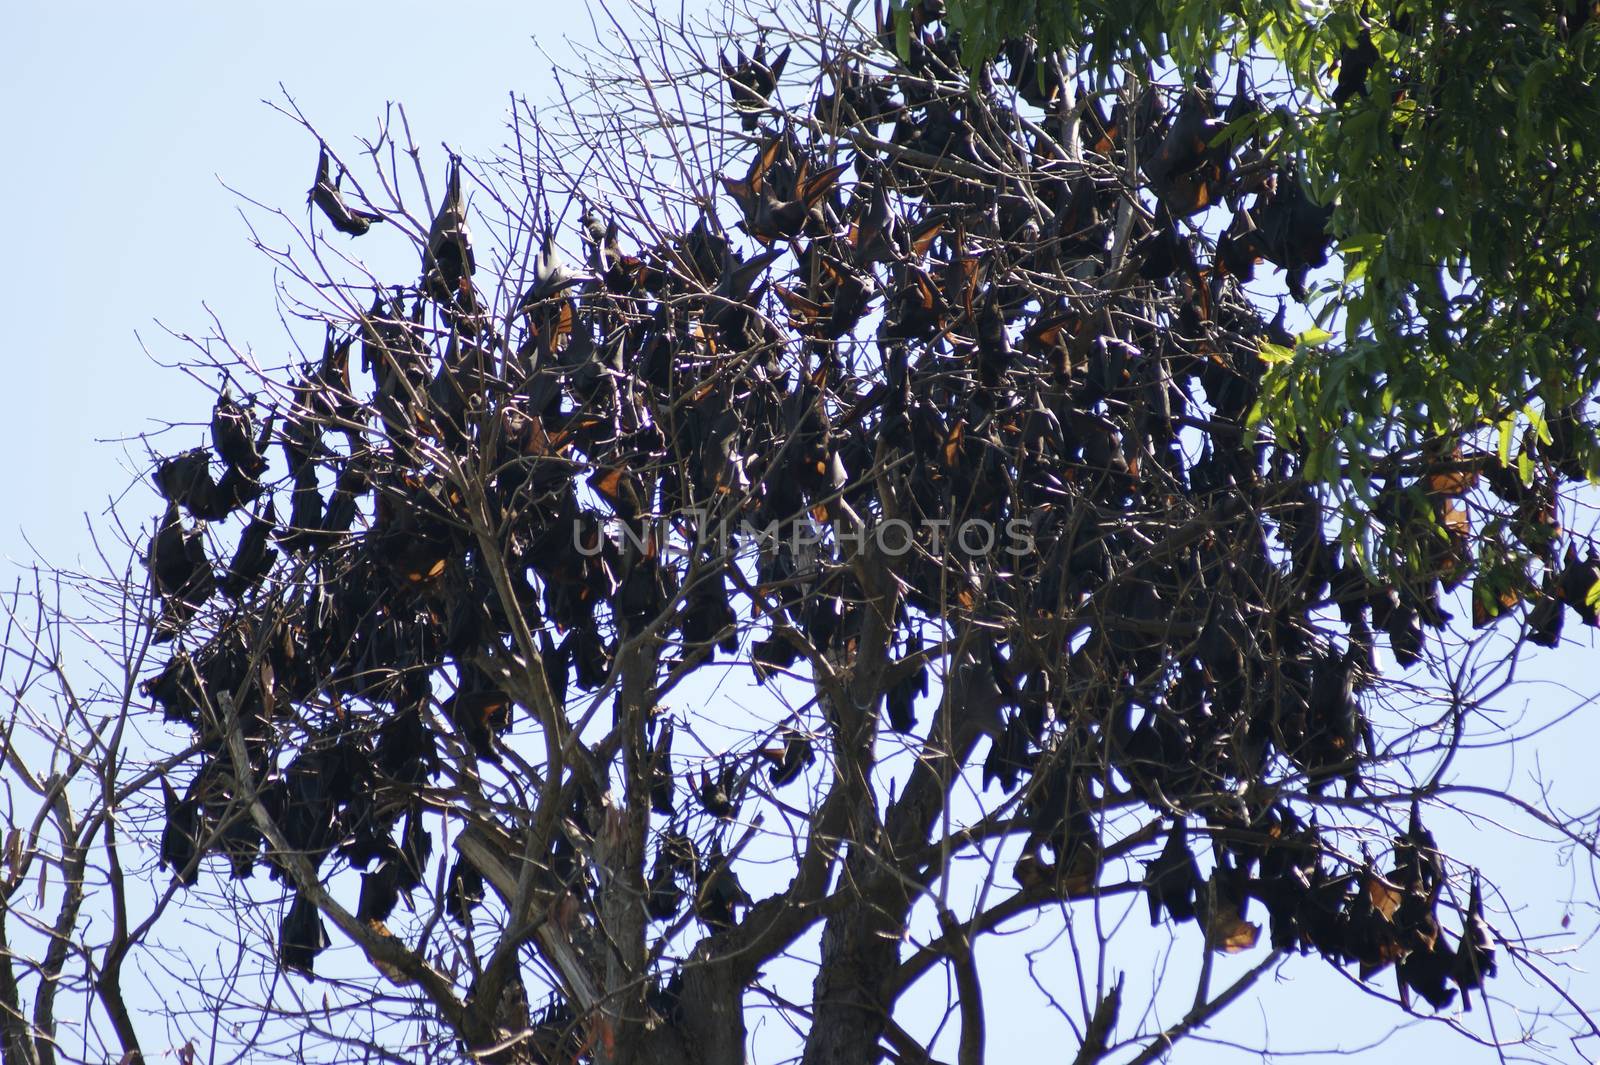 hordes of bats by antonihalim